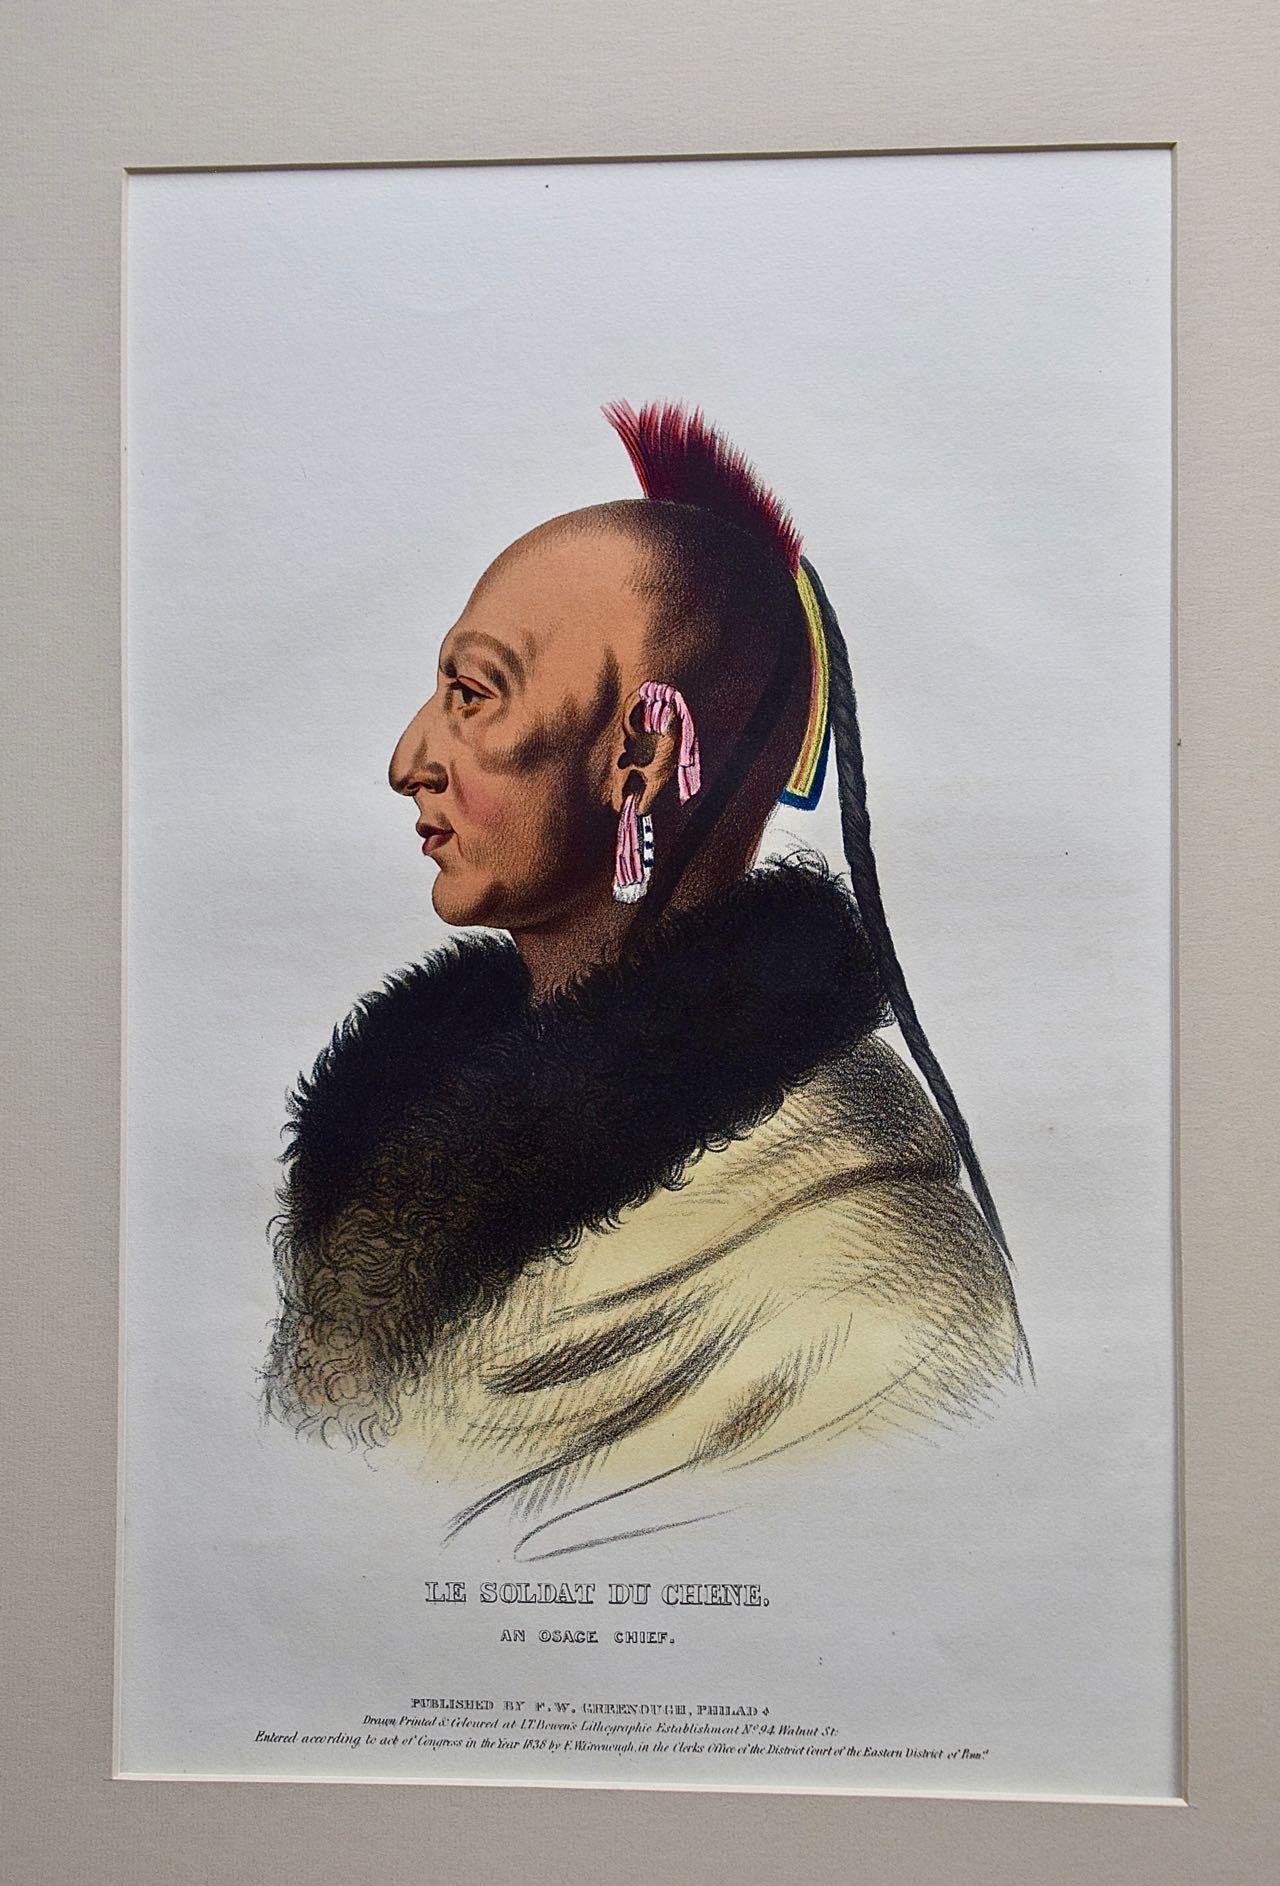 McKenney & Hall Portrait Print - Le Soldat Du Chene, Osage Chief: Hand Colored McKenney Folio-sized Lithograph